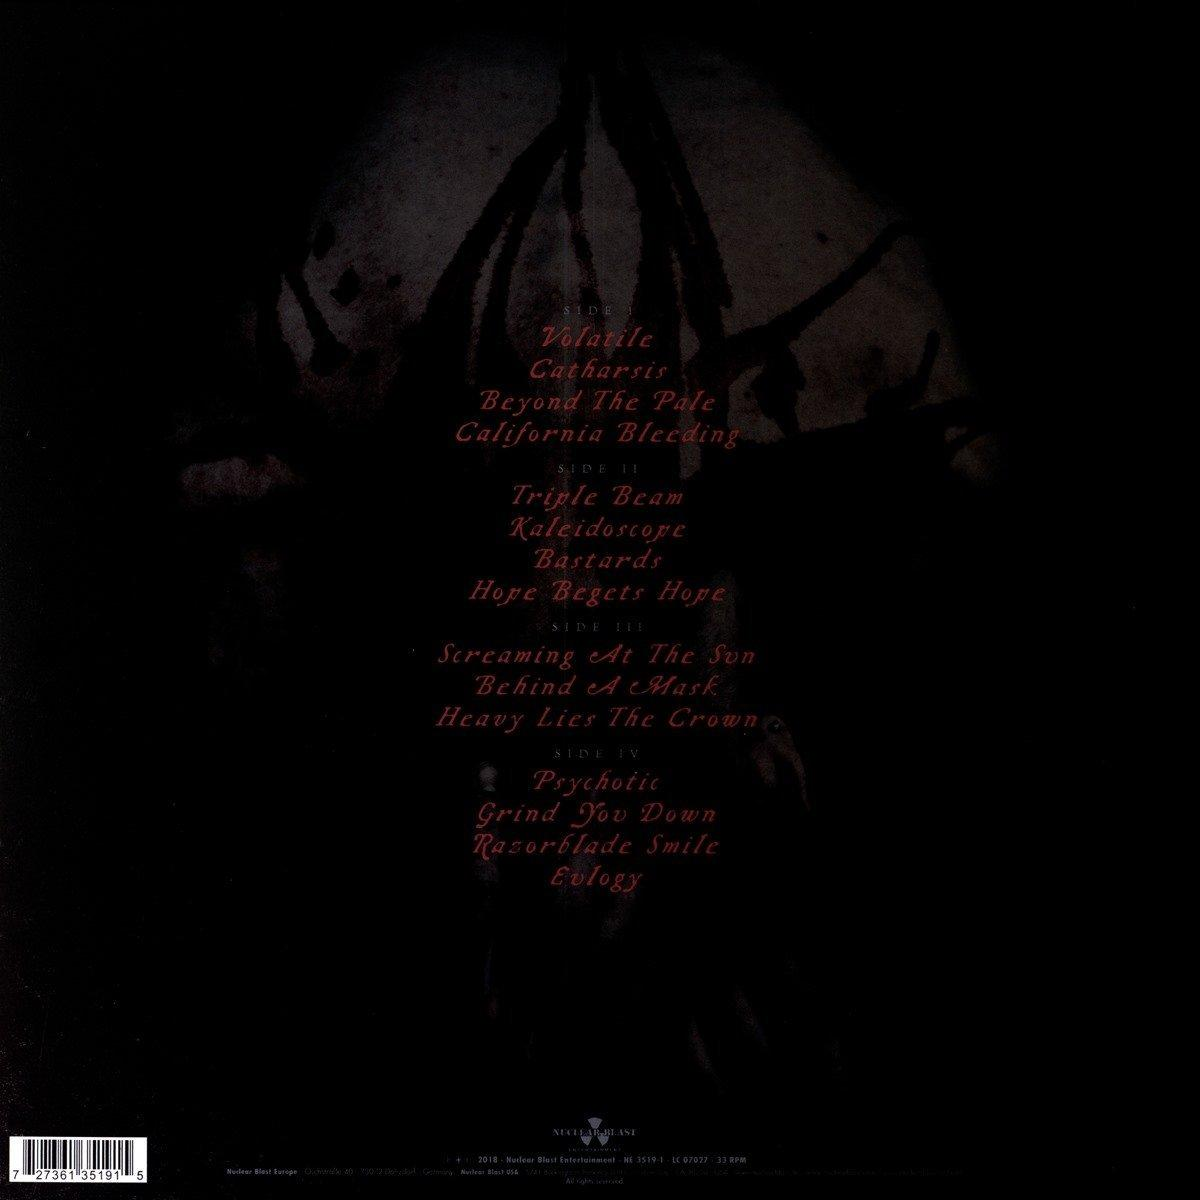 - Catharsis - Machine Head (Vinyl)